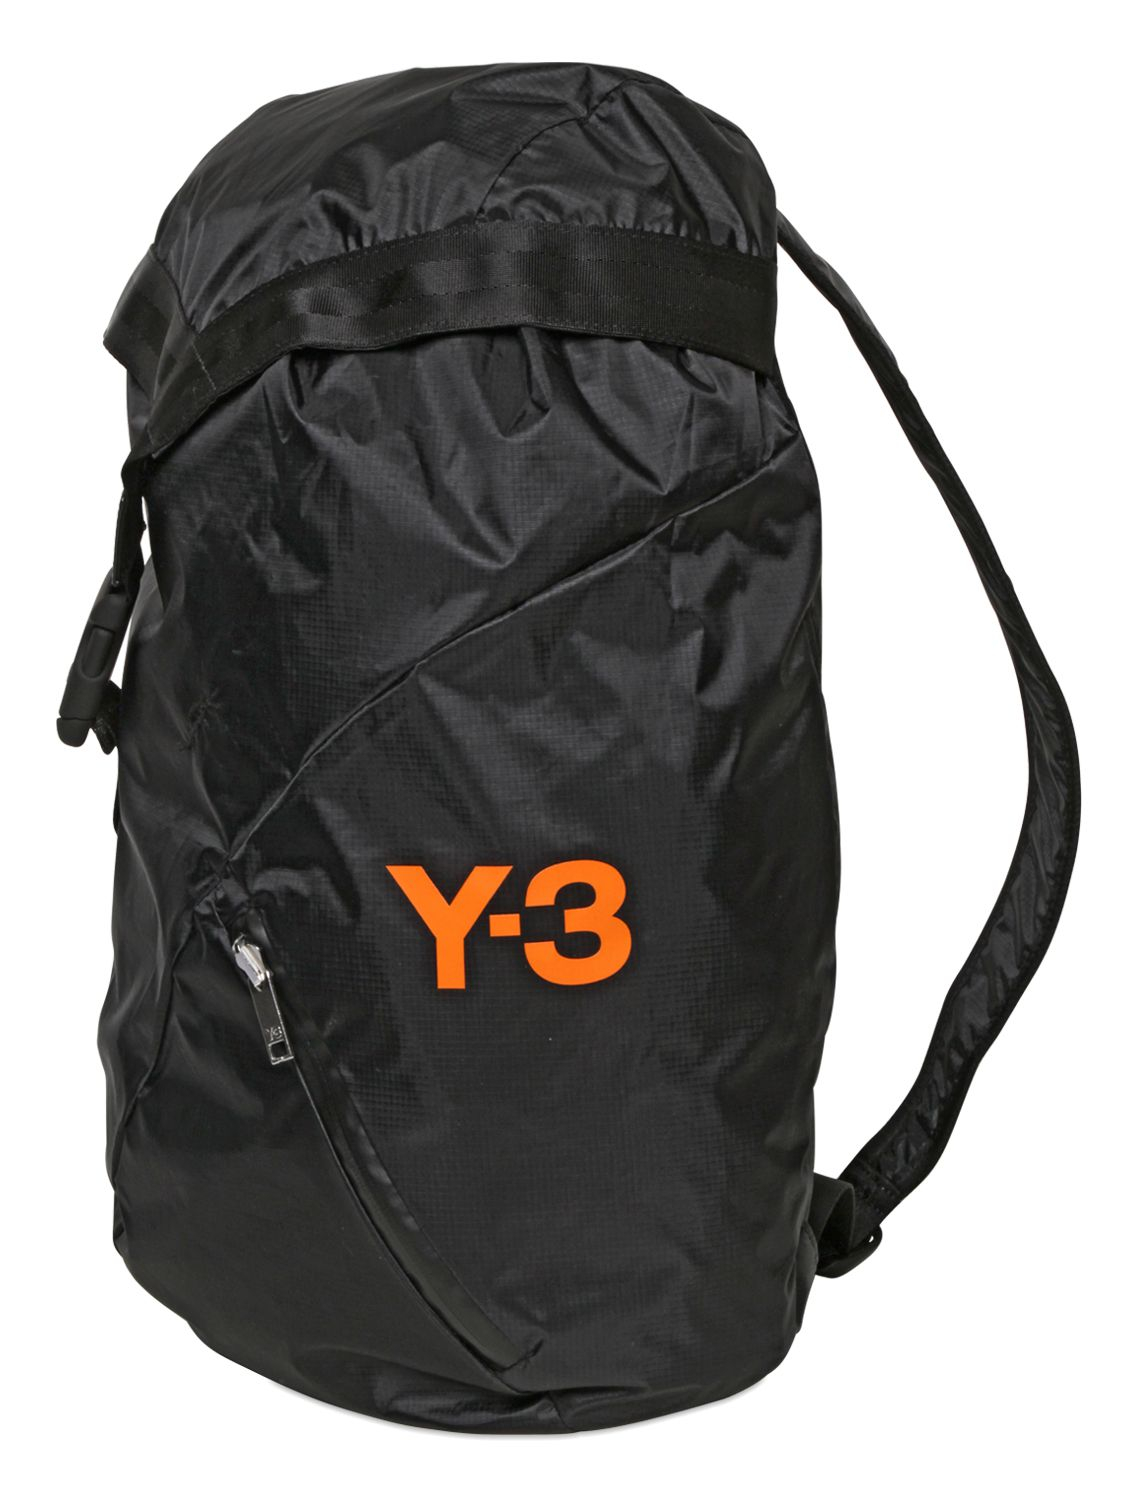 Lyst - Y-3 Packable Ripstop Backpack in Black for Men